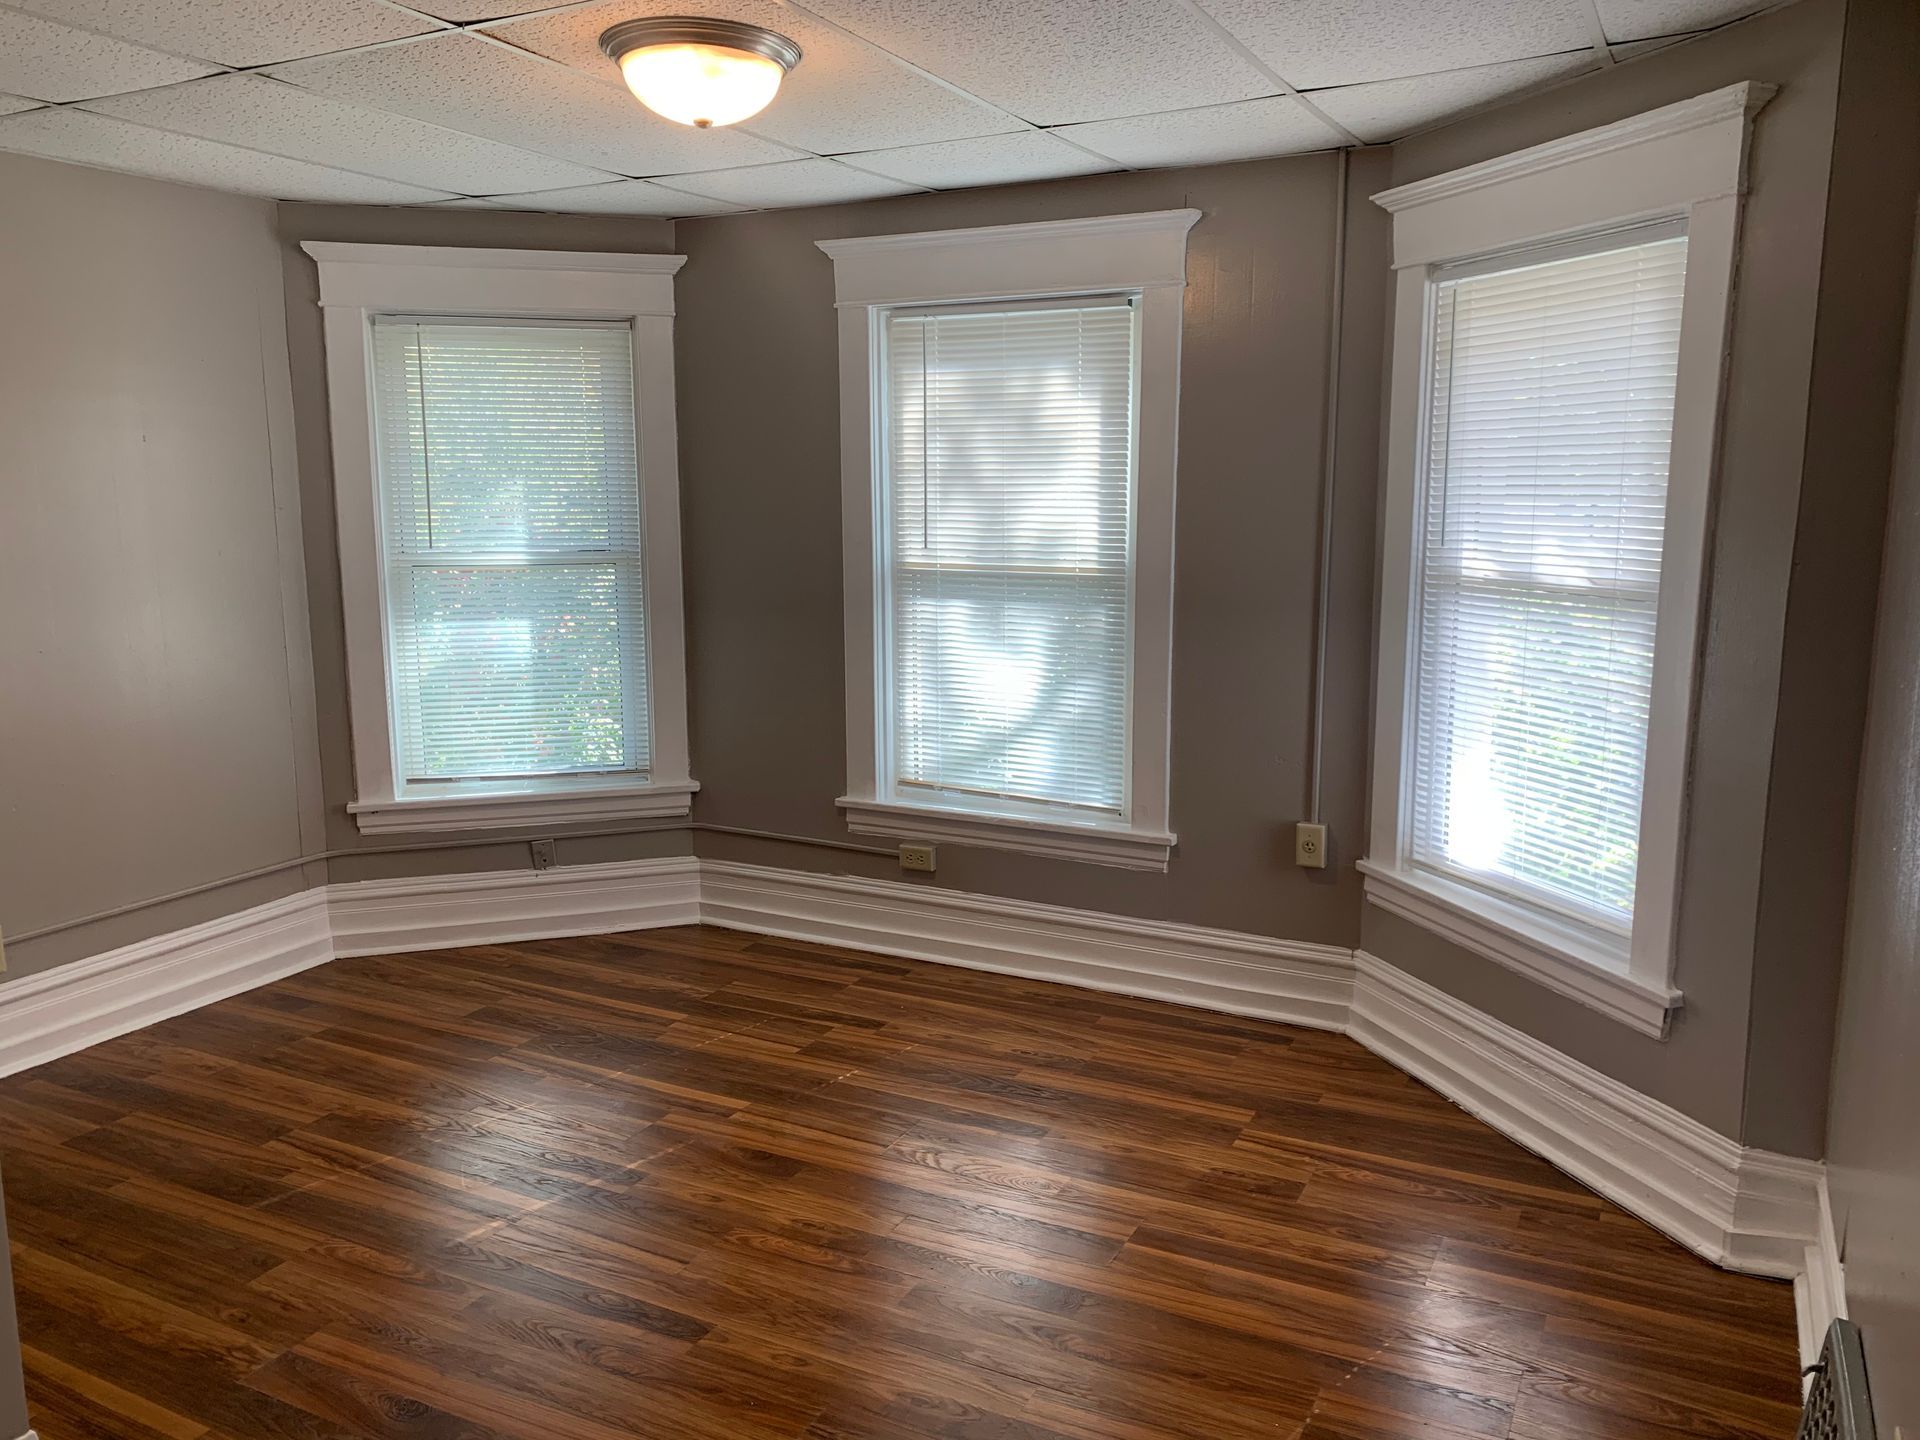 An empty room with hardwood floors and three windows.